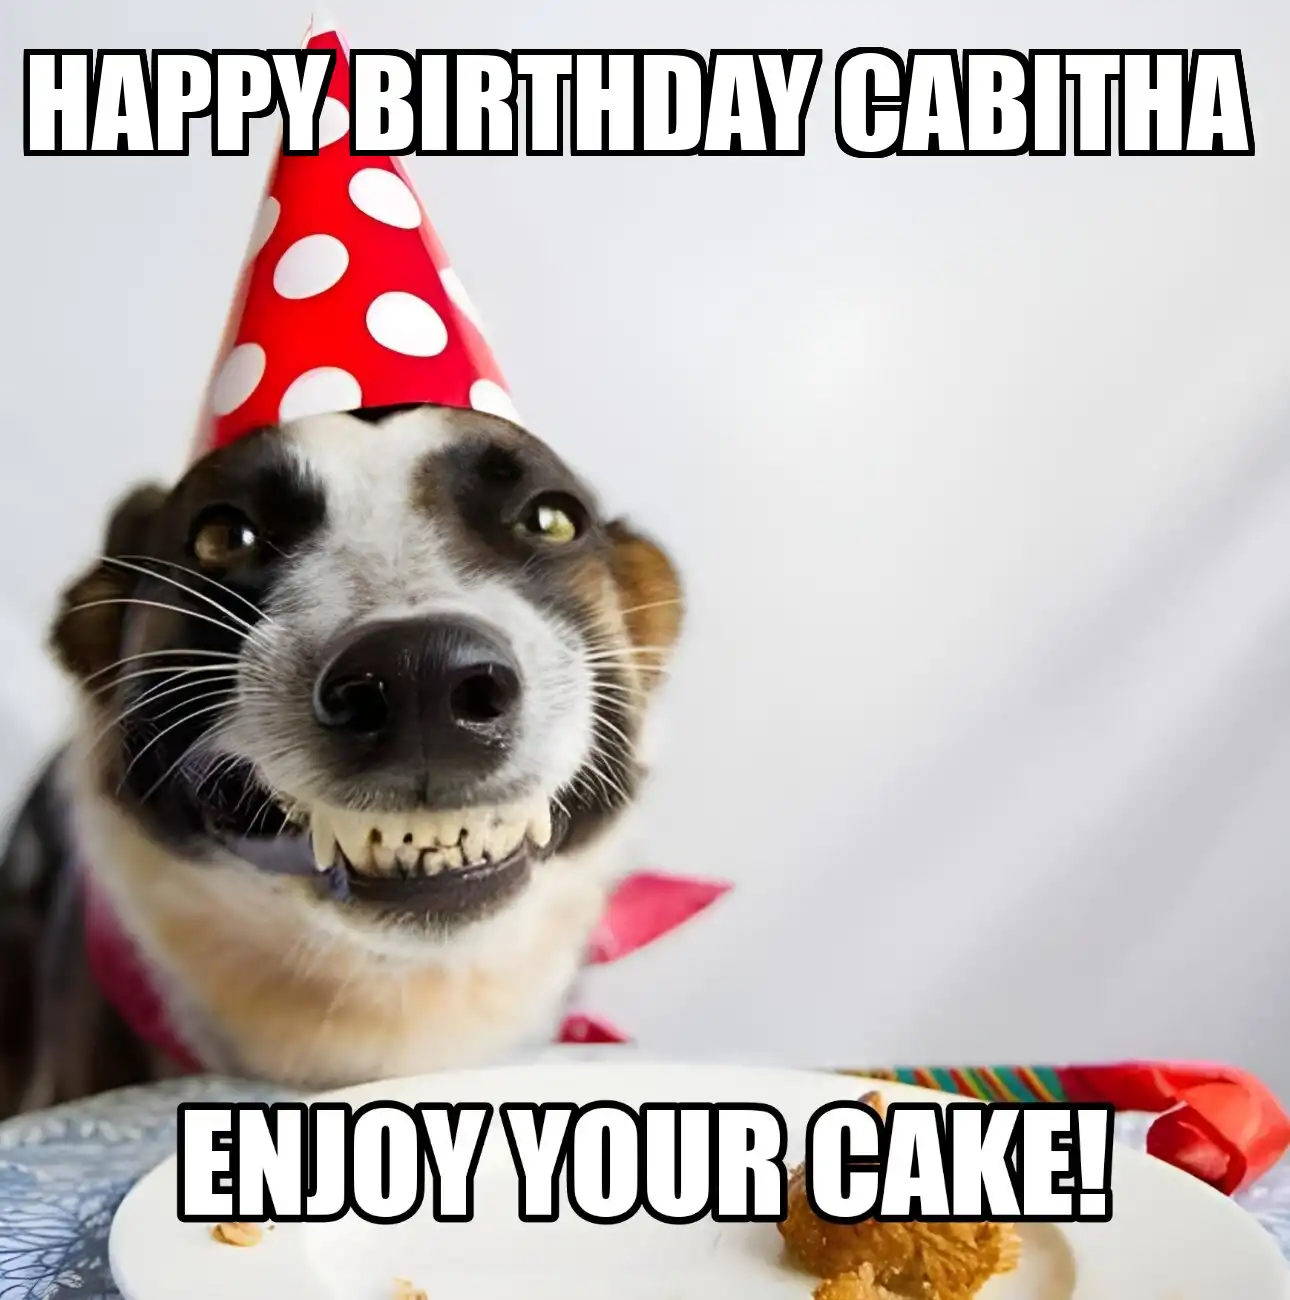 Happy Birthday Cabitha Enjoy Your Cake Dog Meme